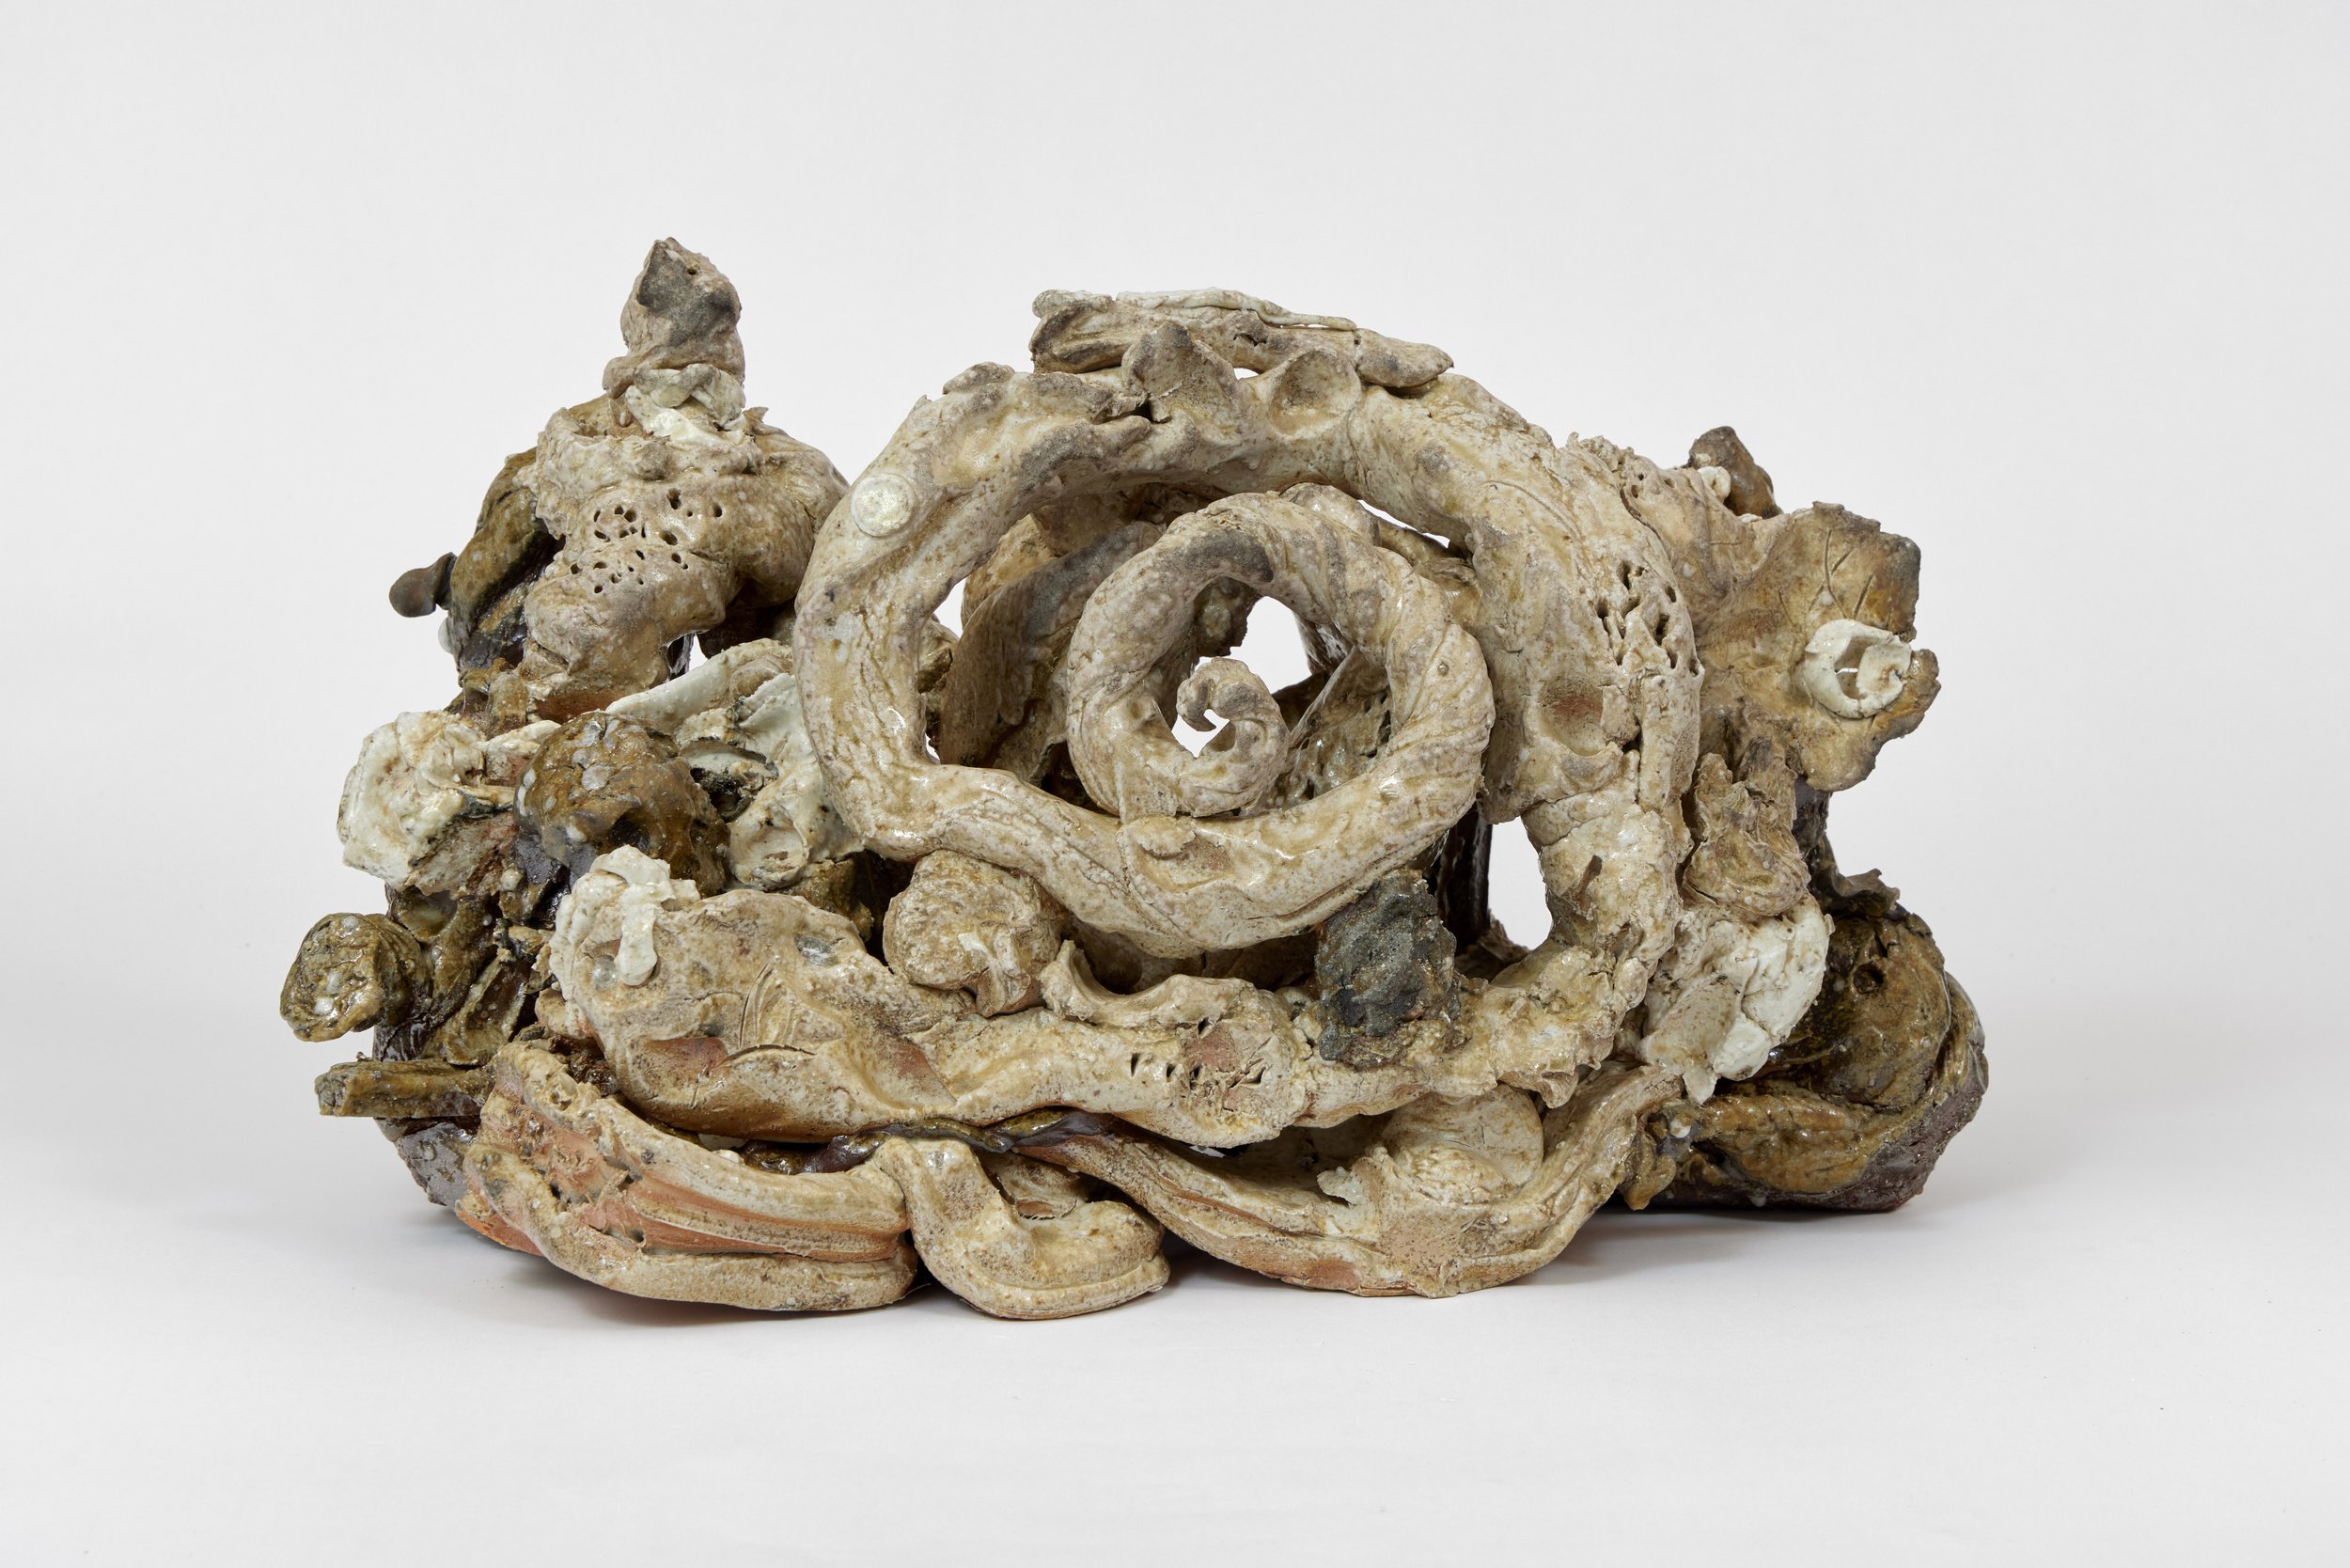  Untitled  anagama natural ash  French and English bodies, crude kaolin, decomposed granite  Yohen, bidoro,     tombo-no-me    44 x 35x 24 cm    2023 